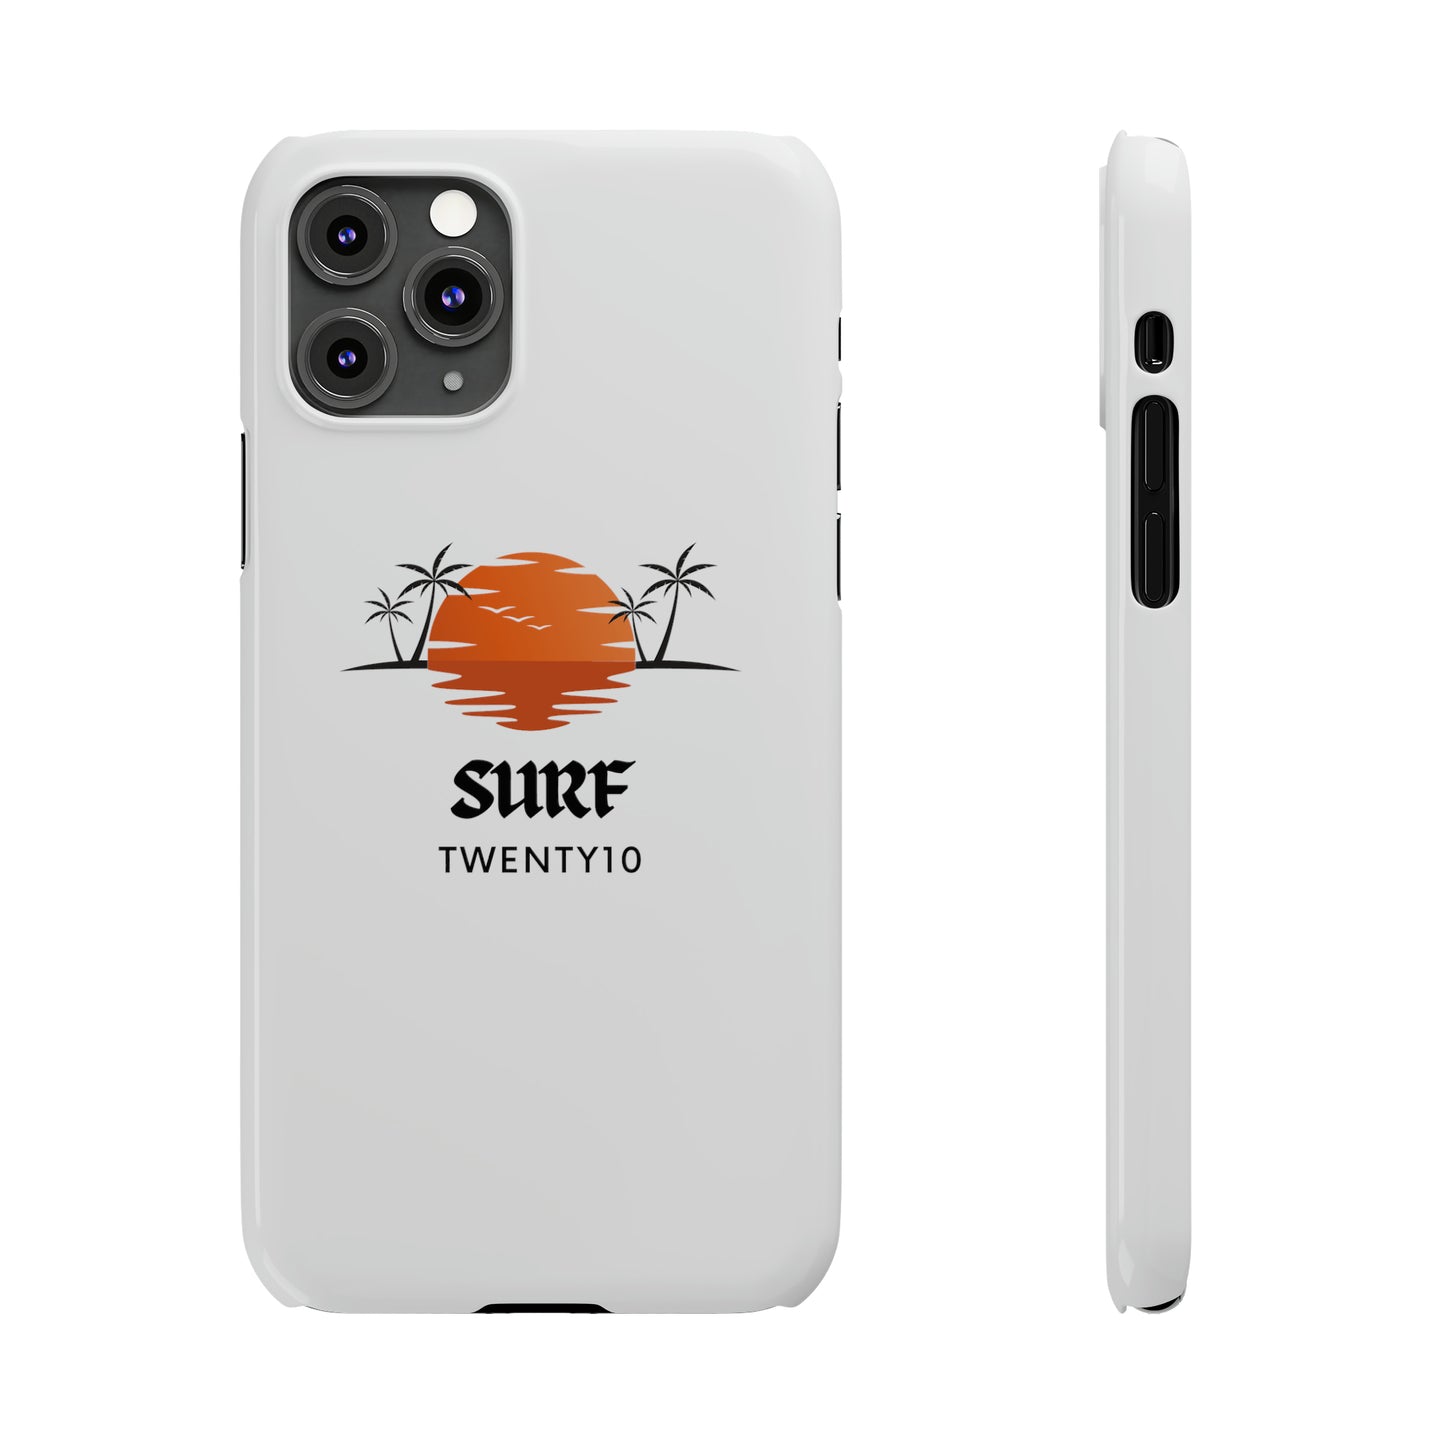 Sunset Surf Twenty10 Slim Phone Case